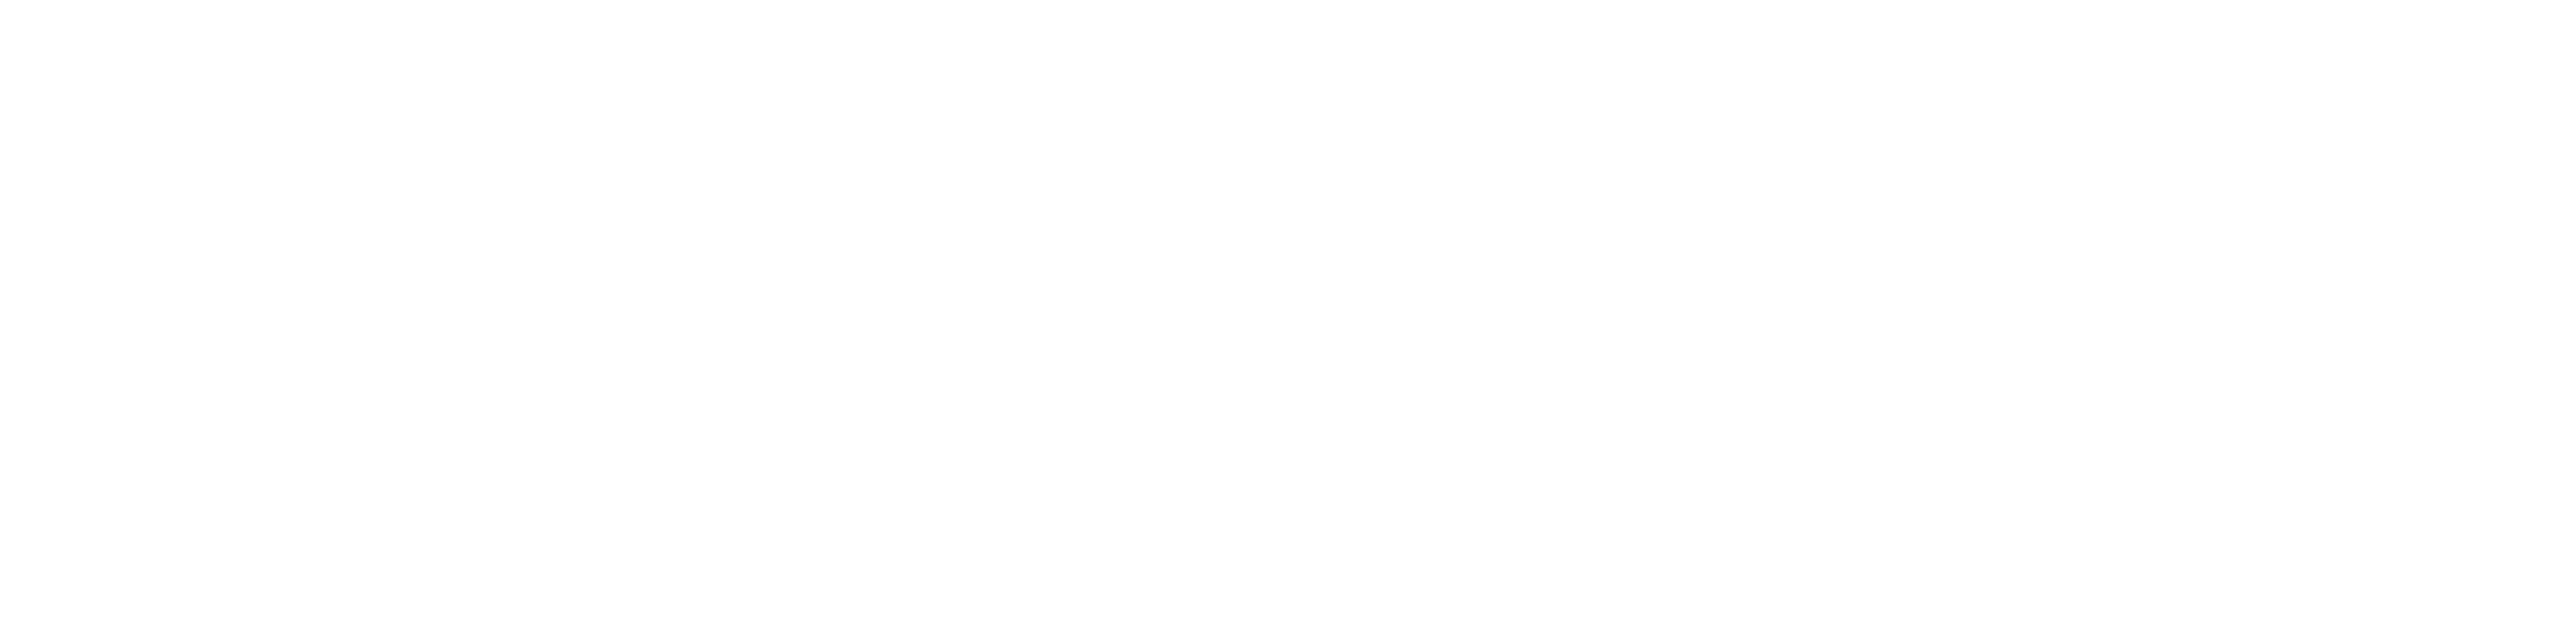 City of Dublin Ohio Logo - Bridge Park